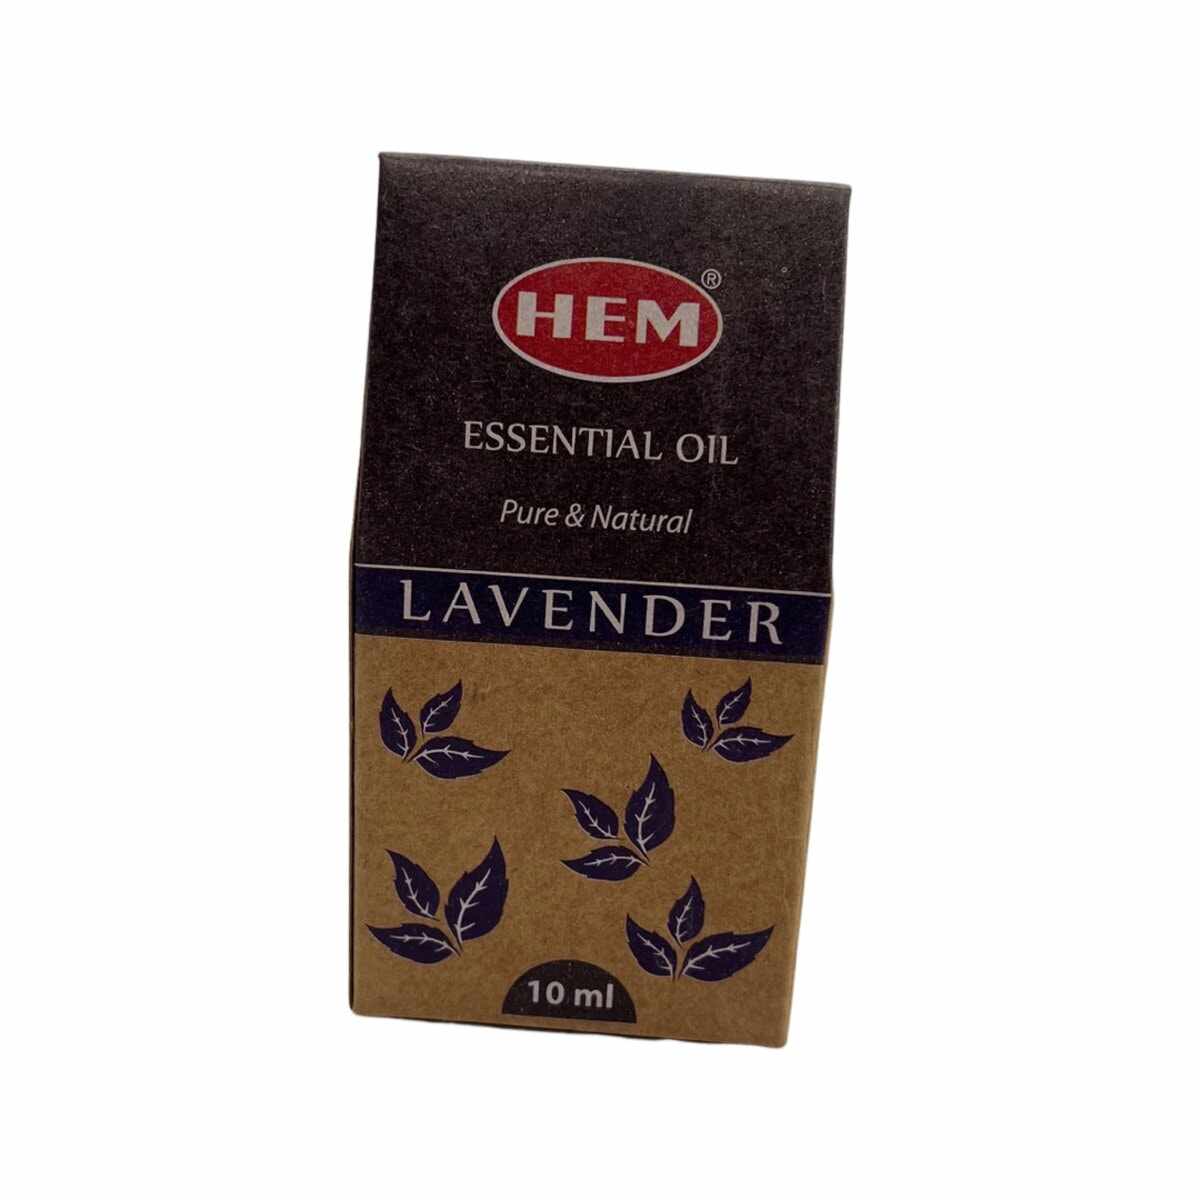 Ulei esential hem pure and natural lavender 10ml